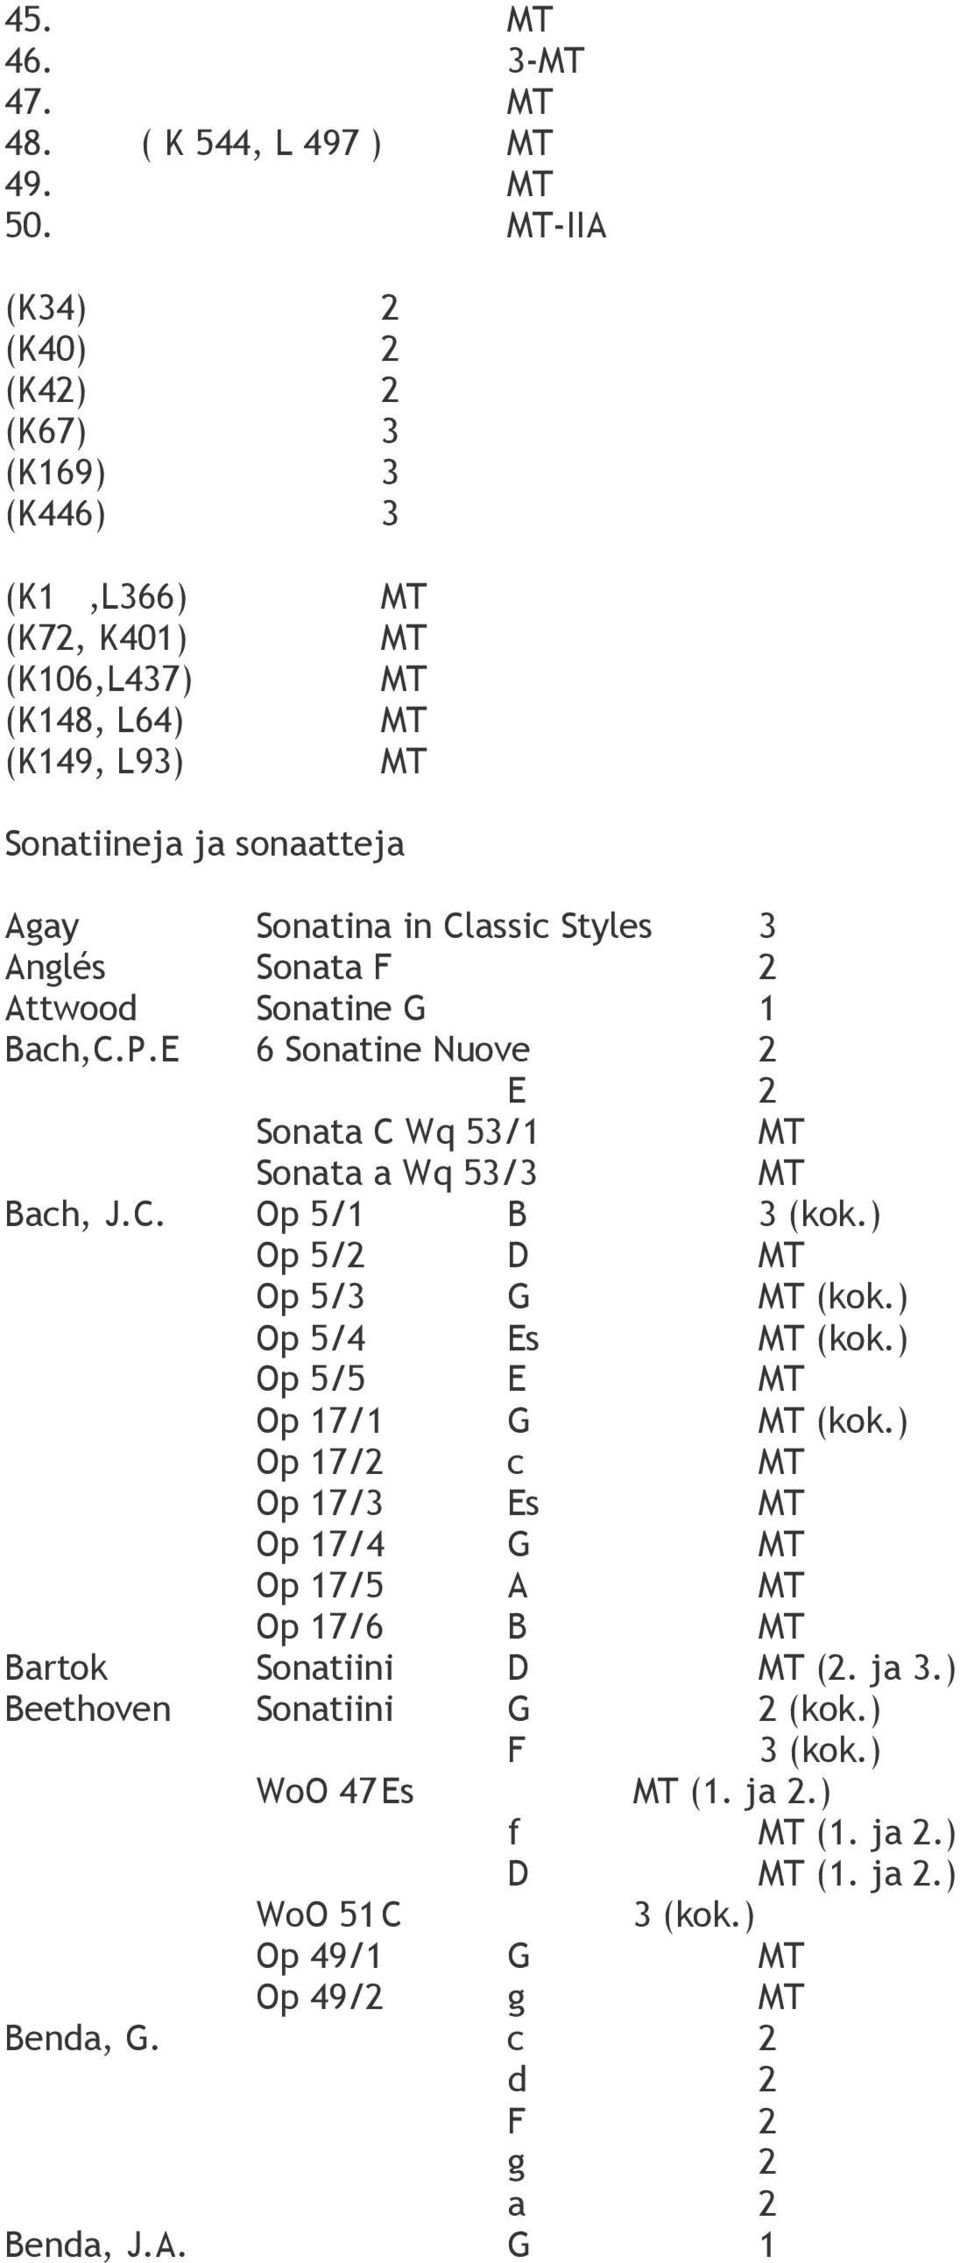 Styles 3 Anglés Sonata F 2 Attwood Sonatine G 1 Bach,C.P.E 6 Sonatine Nuove 2 E 2 Sonata C Wq 53/1 Sonata a Wq 53/3 Bach, J.C. Op 5/1 B 3 (kok.) Op 5/2 D Op 5/3 G (kok.